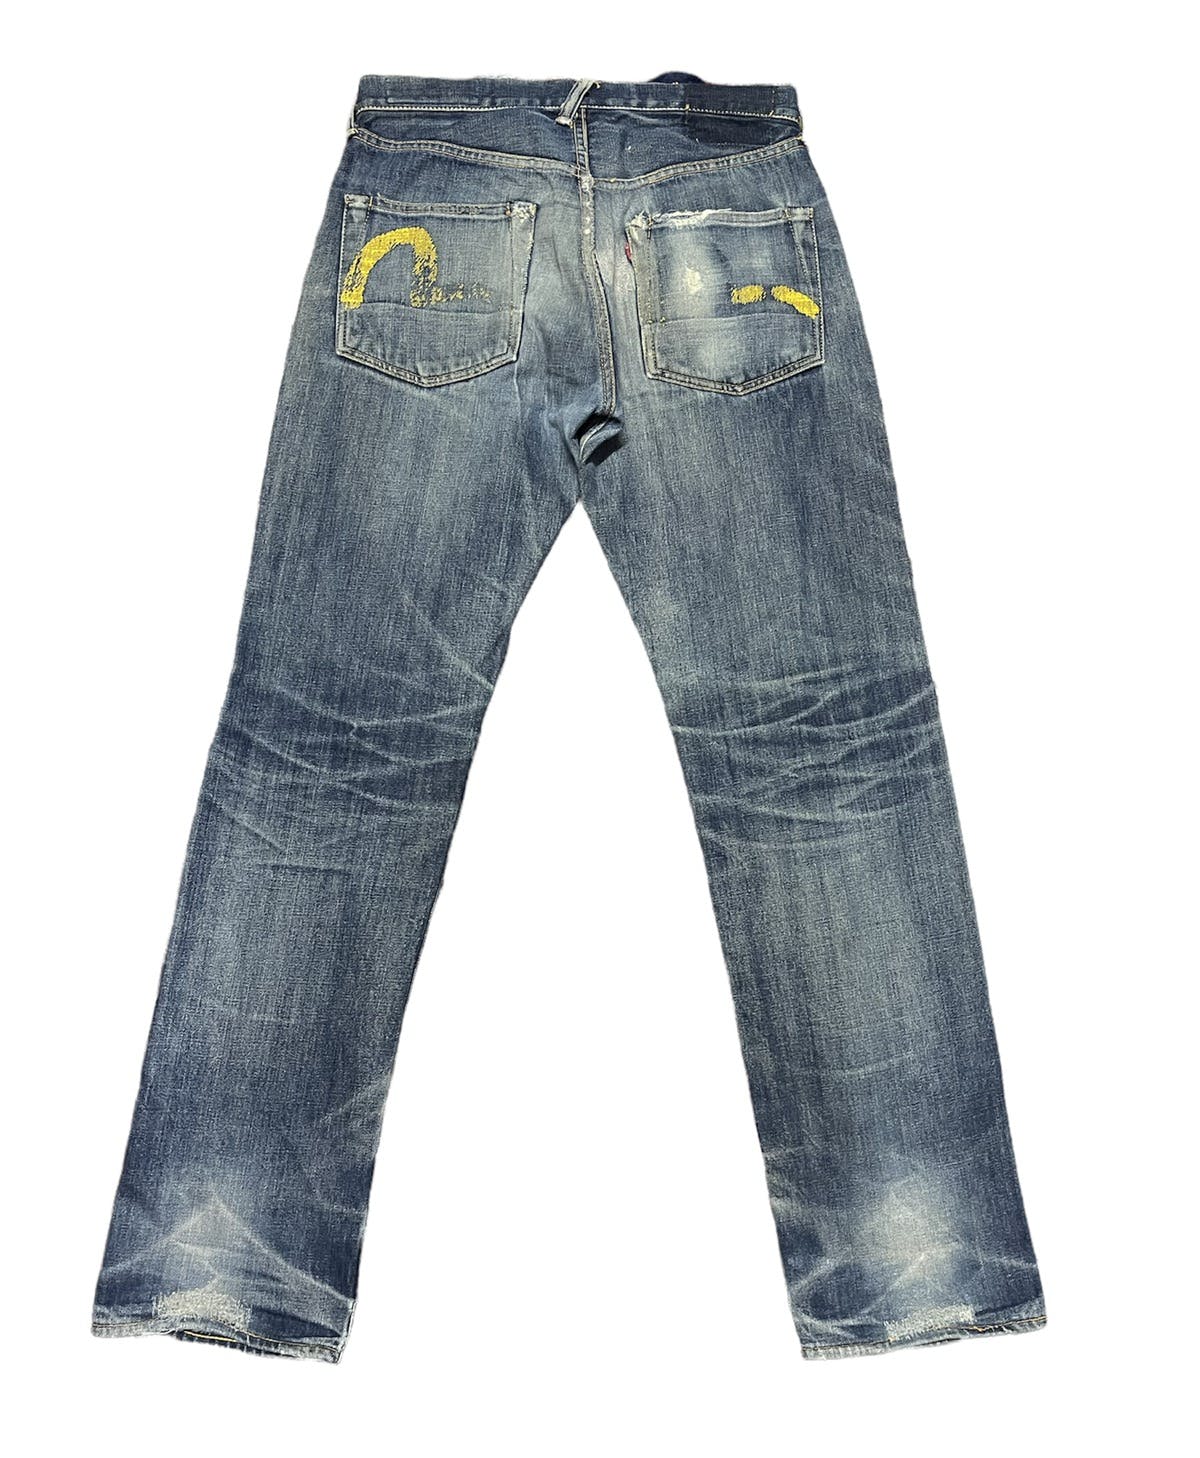 Yamane selevedge jeans distressed - 1